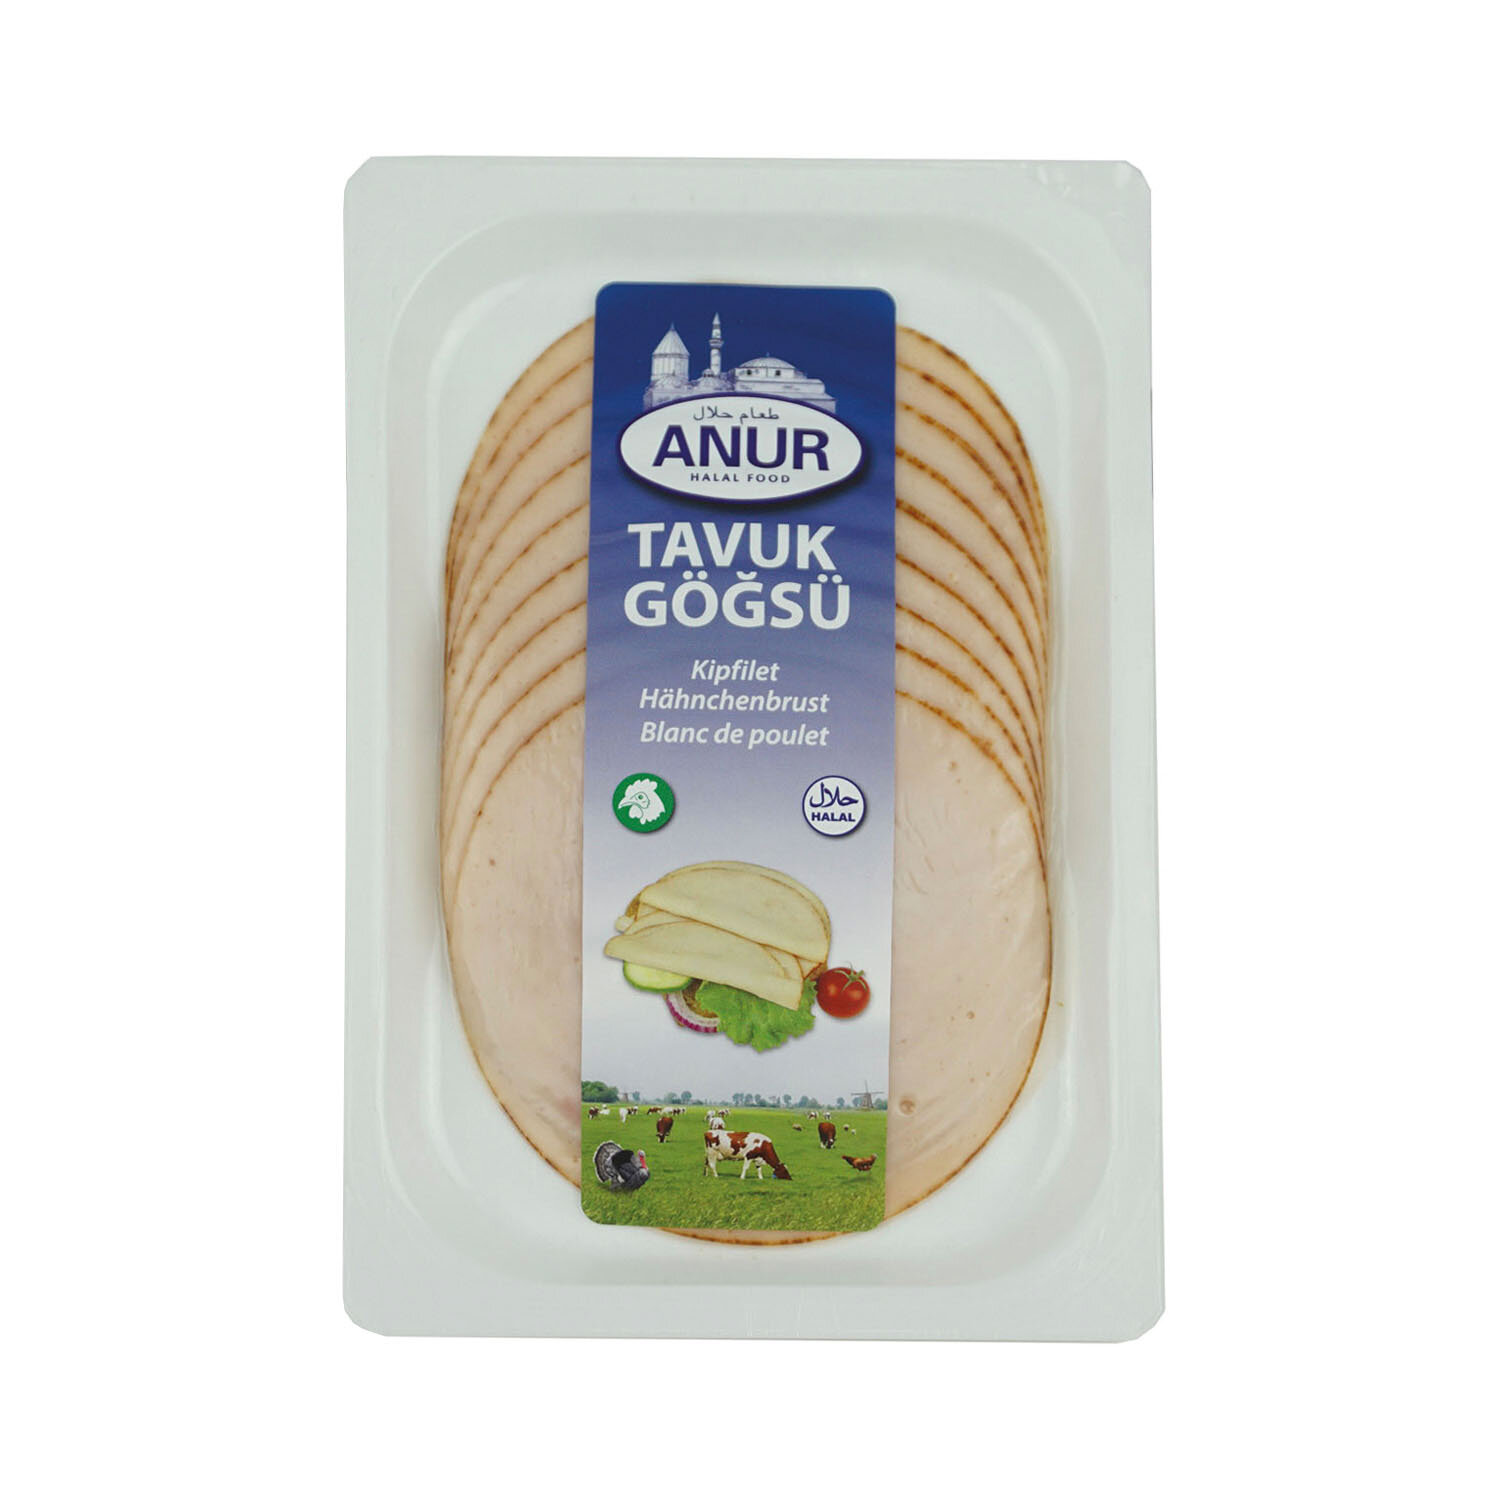 Tavuk Gogsu - Kipfilet - ANUR Halal Food  (Copy)